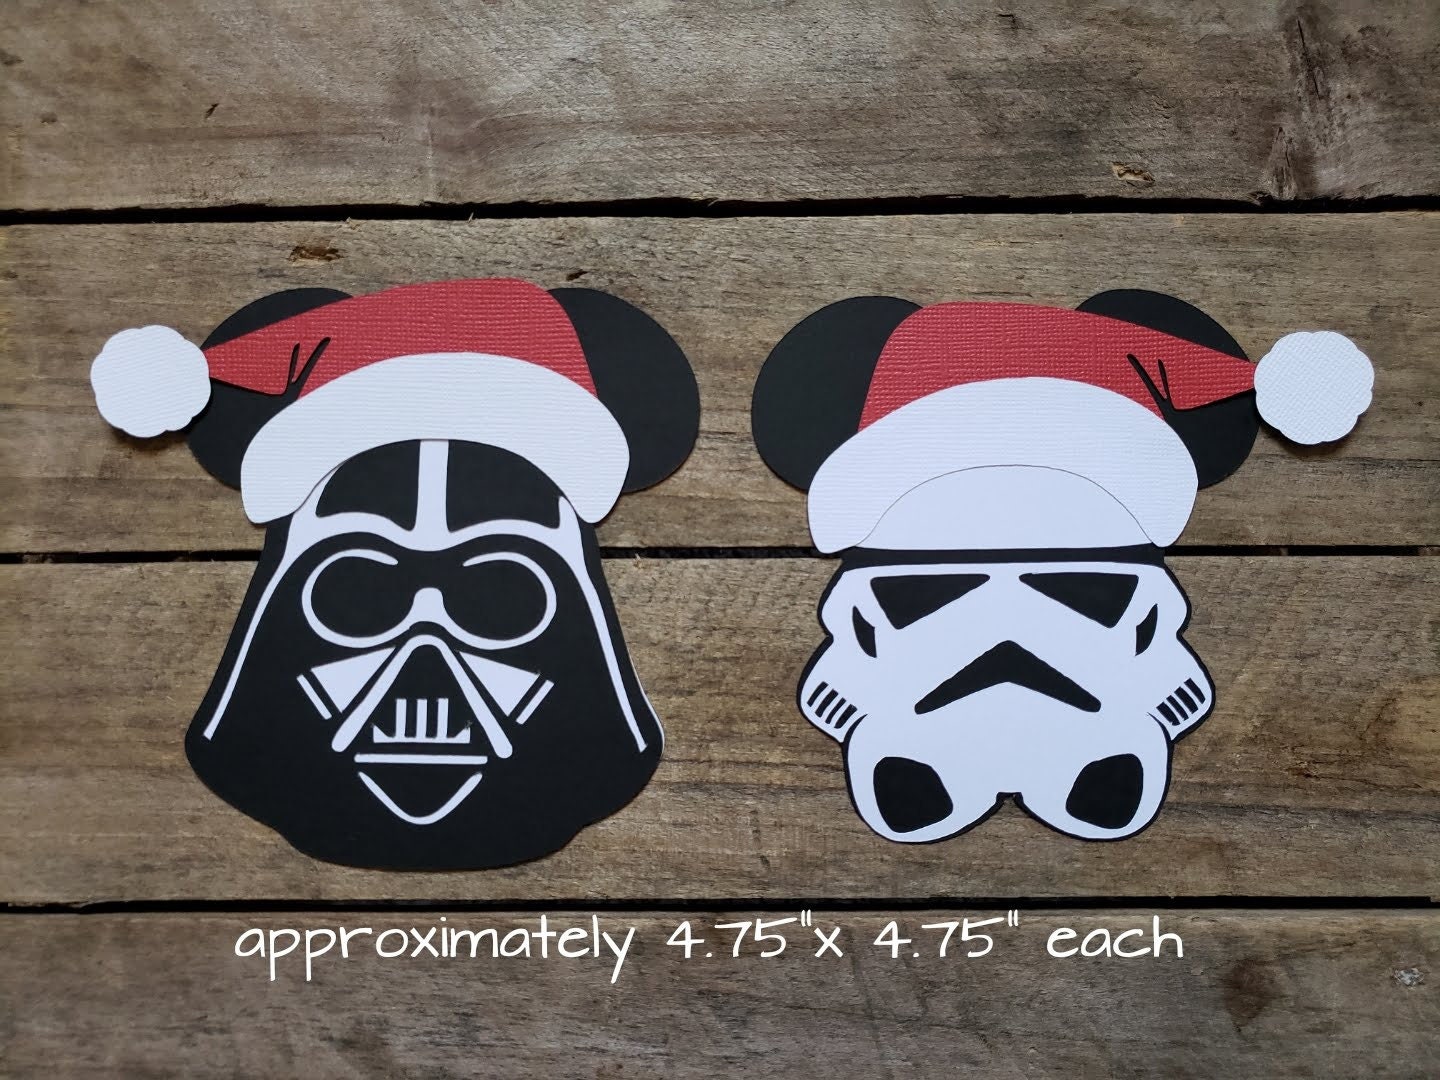 Disney Star Wars Christmas Darth Vader Ornament Custom Name